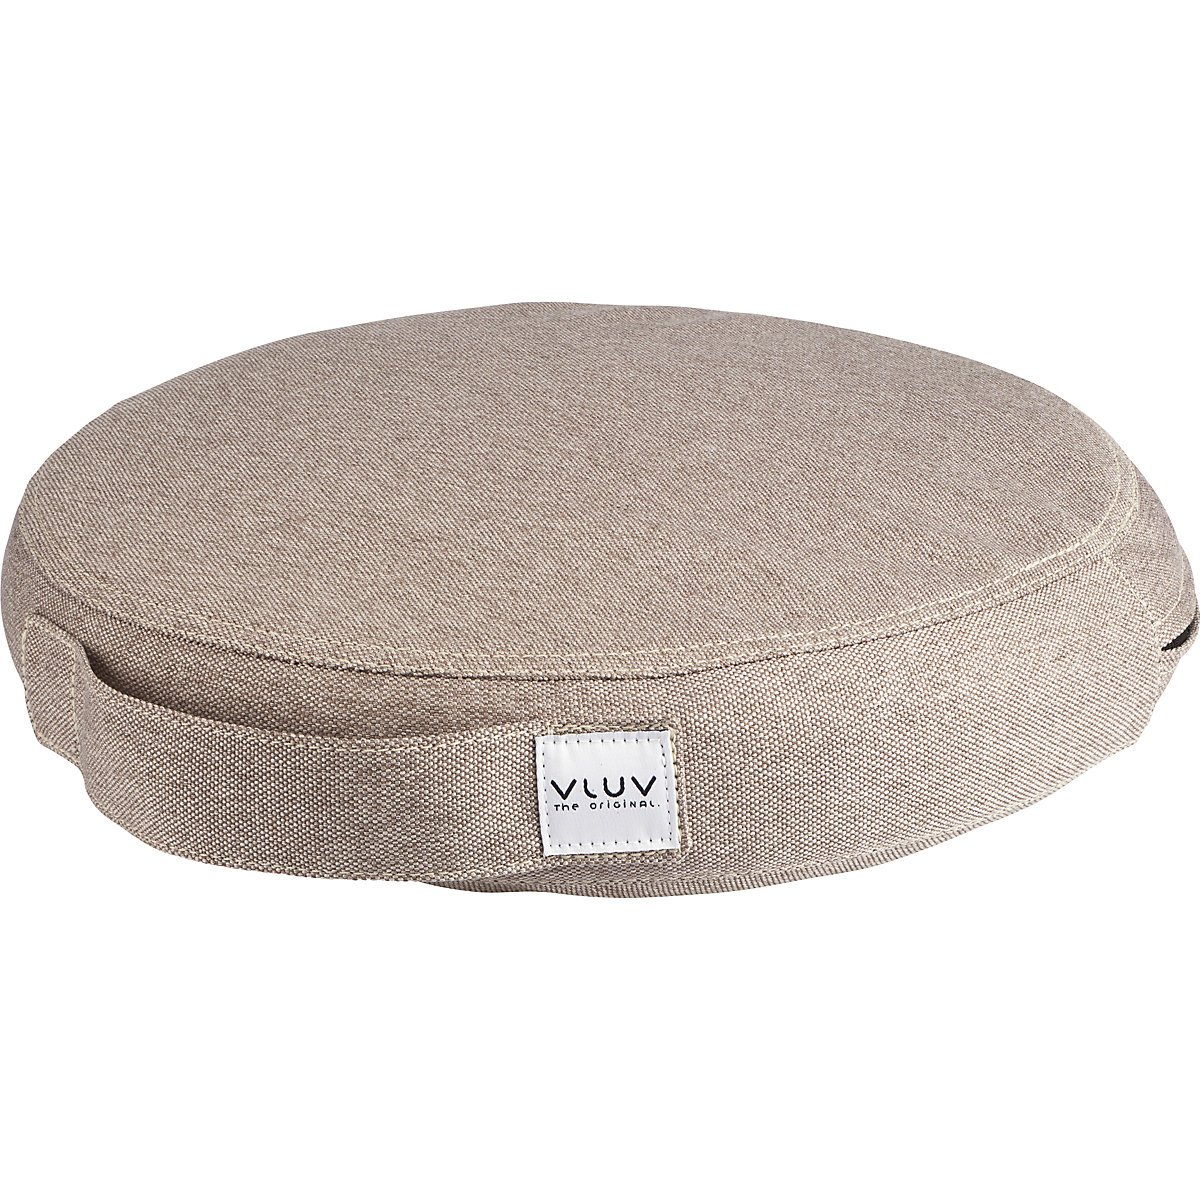 Cuscino per equilibrio PIL&PED LEIV – VLUV, con rivestimento in tessuto, Ø 360 mm, grigio pietra-9